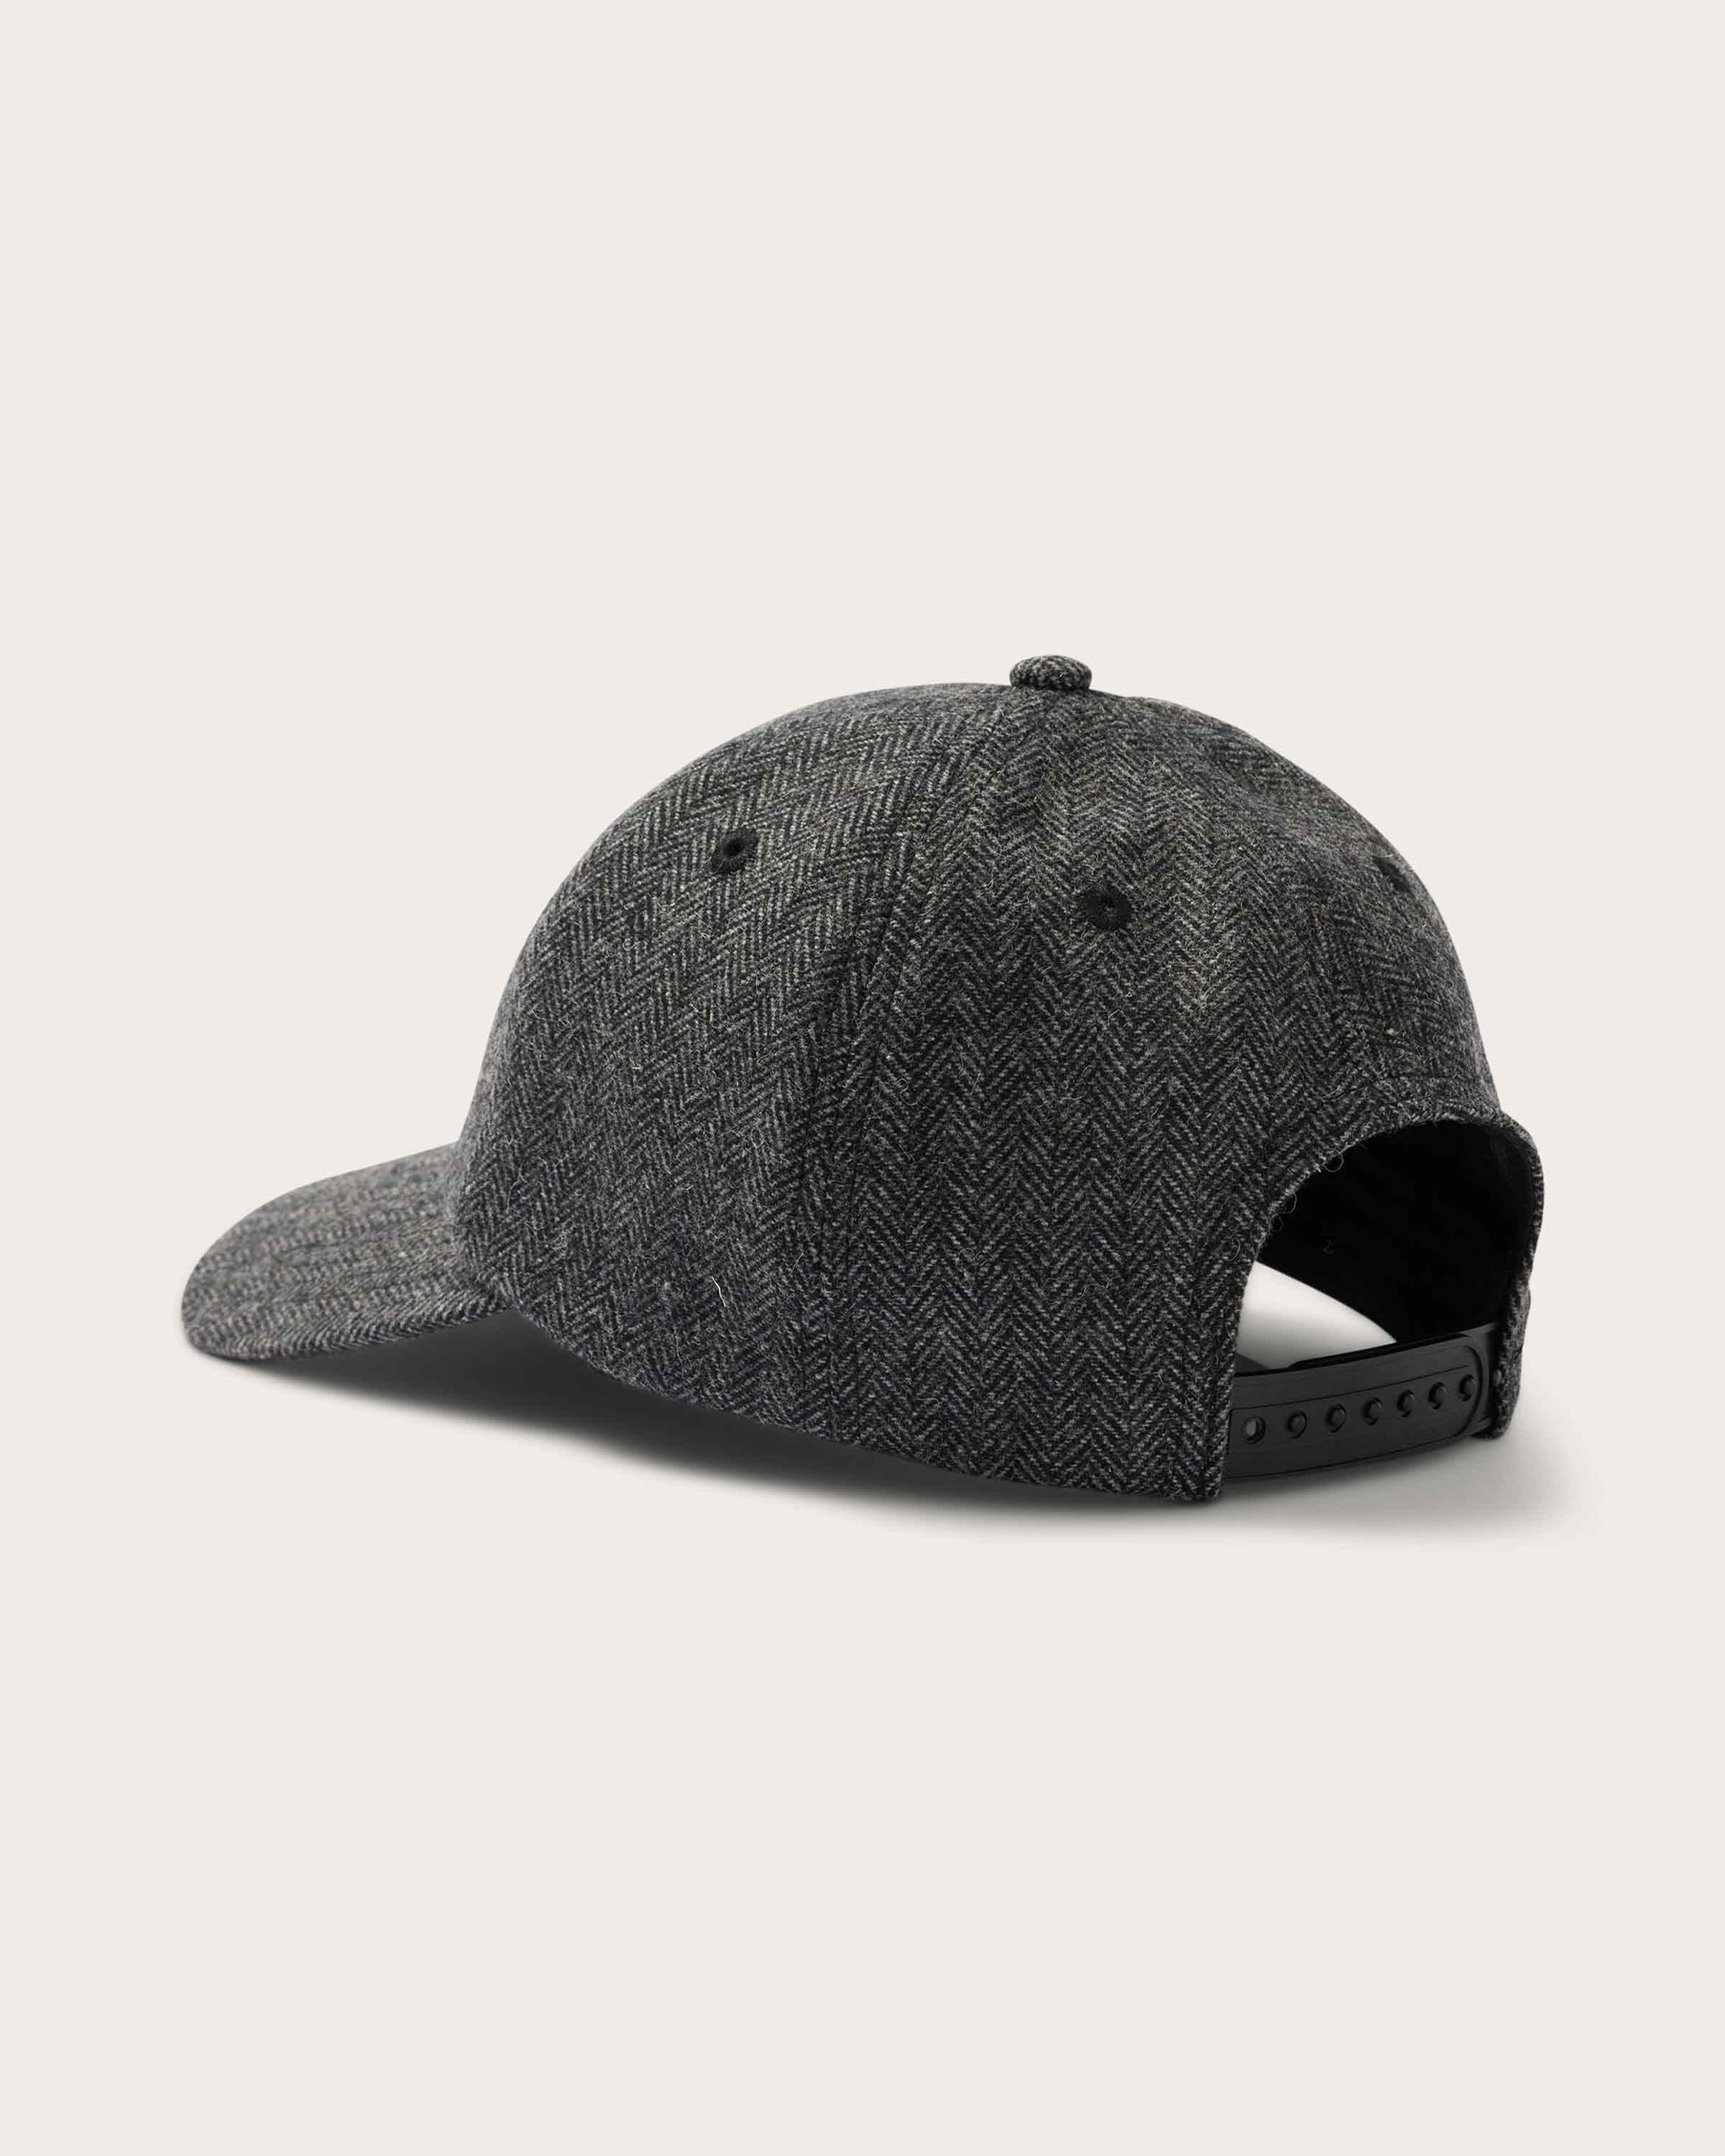 Bristol Cap in Grey & Black - undefined - Hemlock Hat Co. Ball Caps